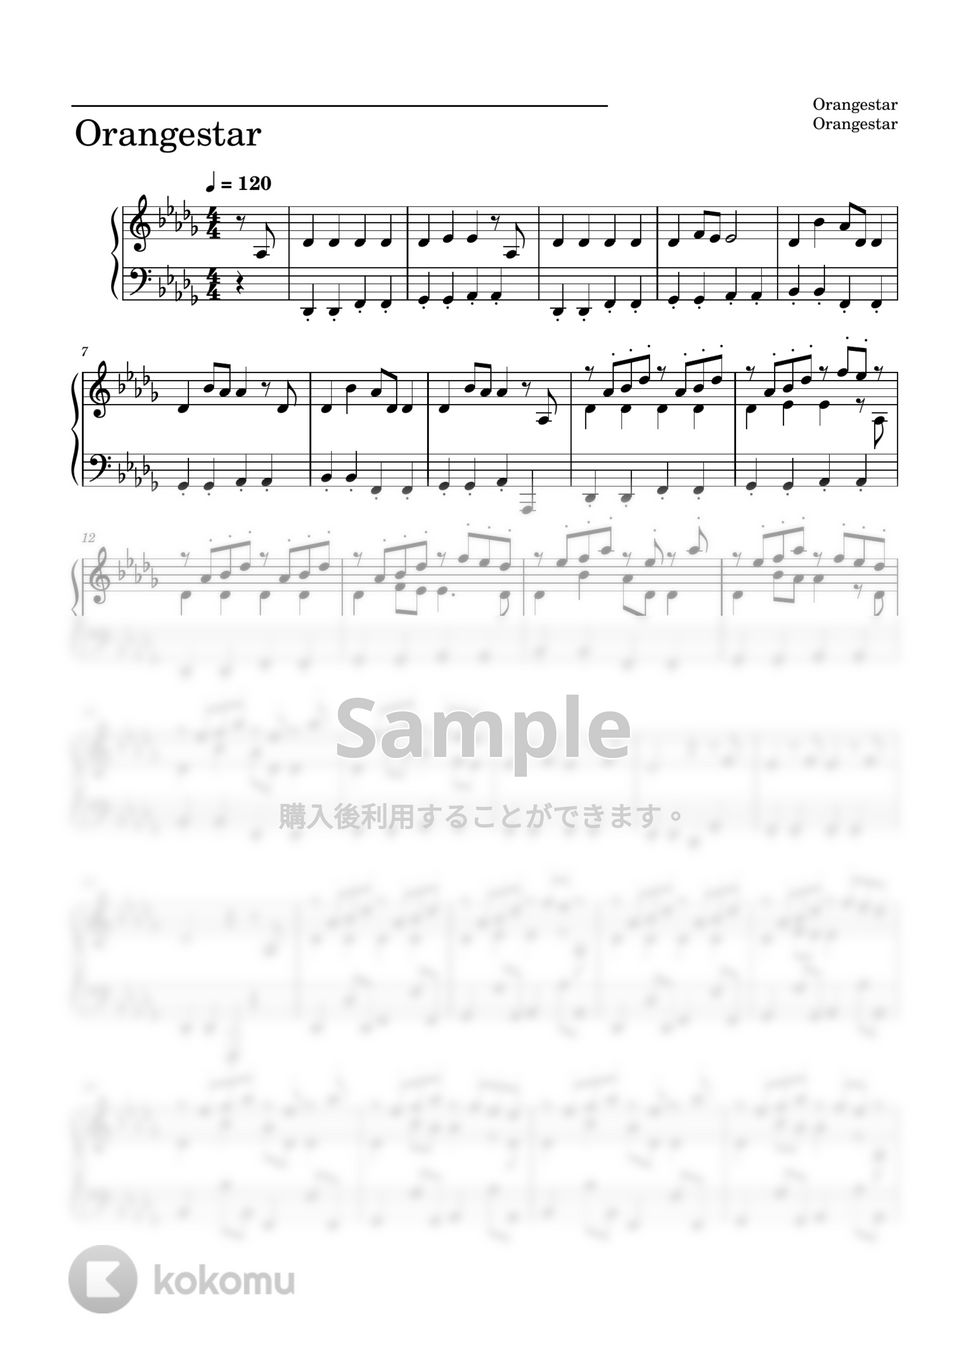 Orangestar - 回る空うさぎ (ピアノソロ譜) by 萌や氏